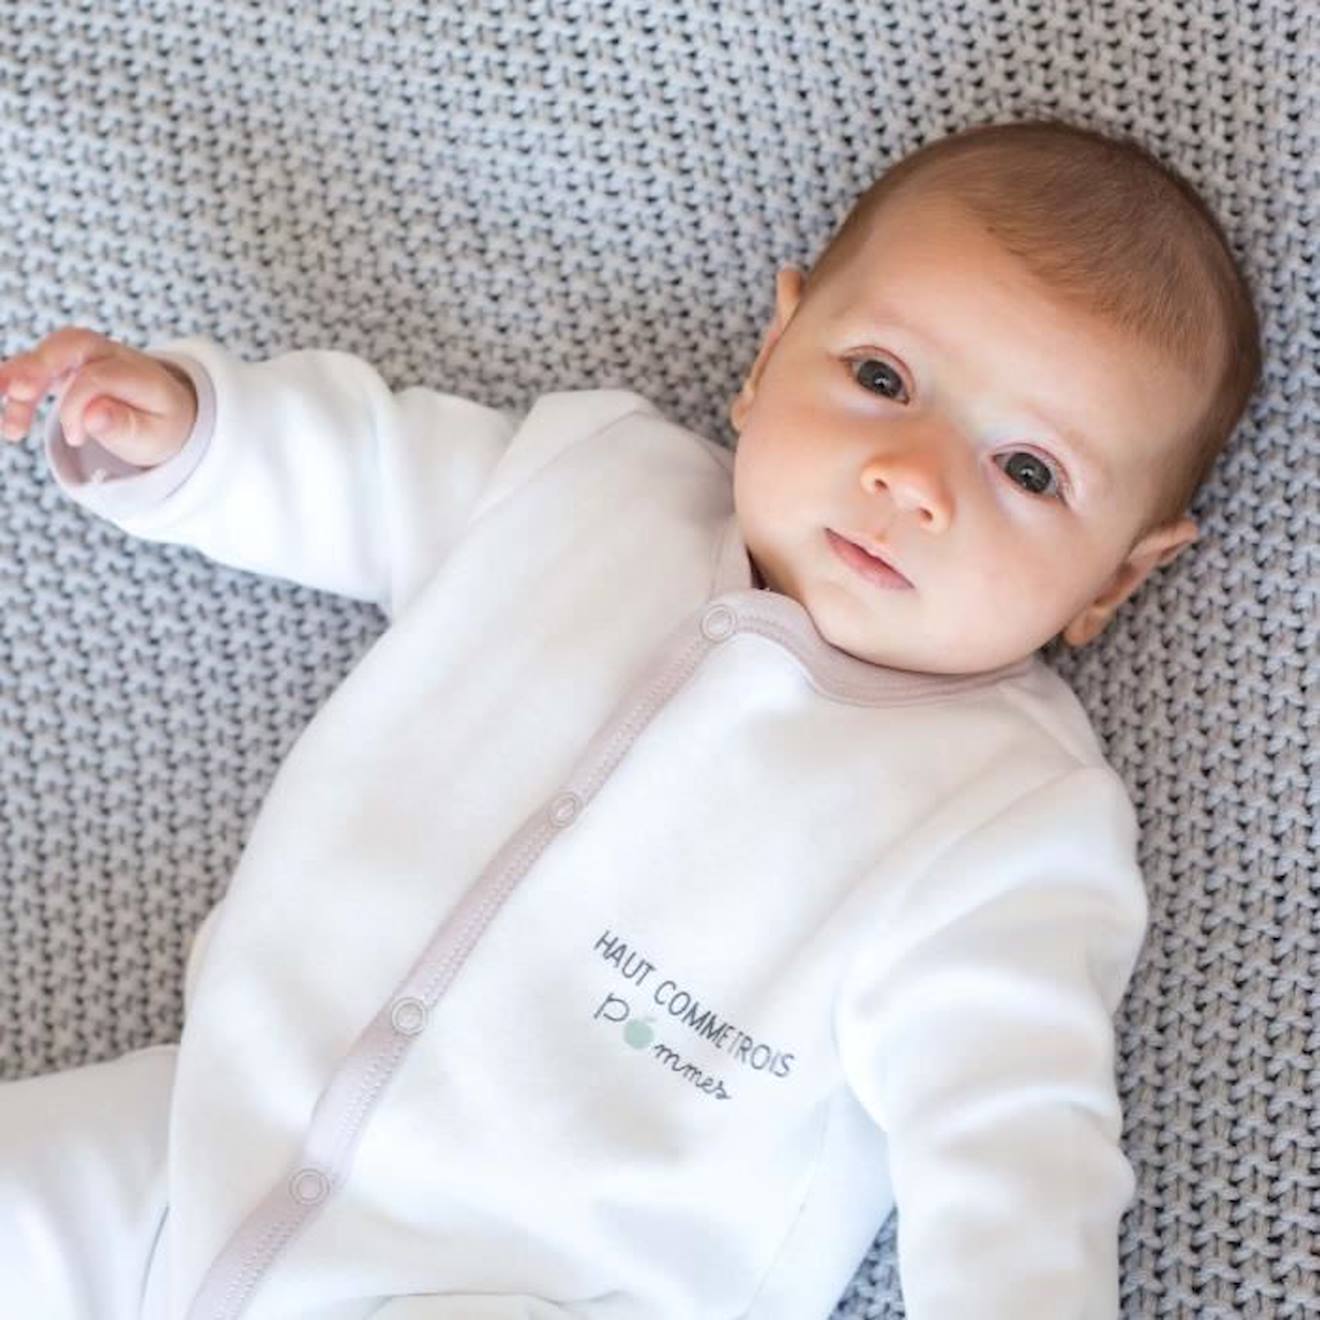 Pyjama bébé 1 mois - TROIS KILOS SEPT